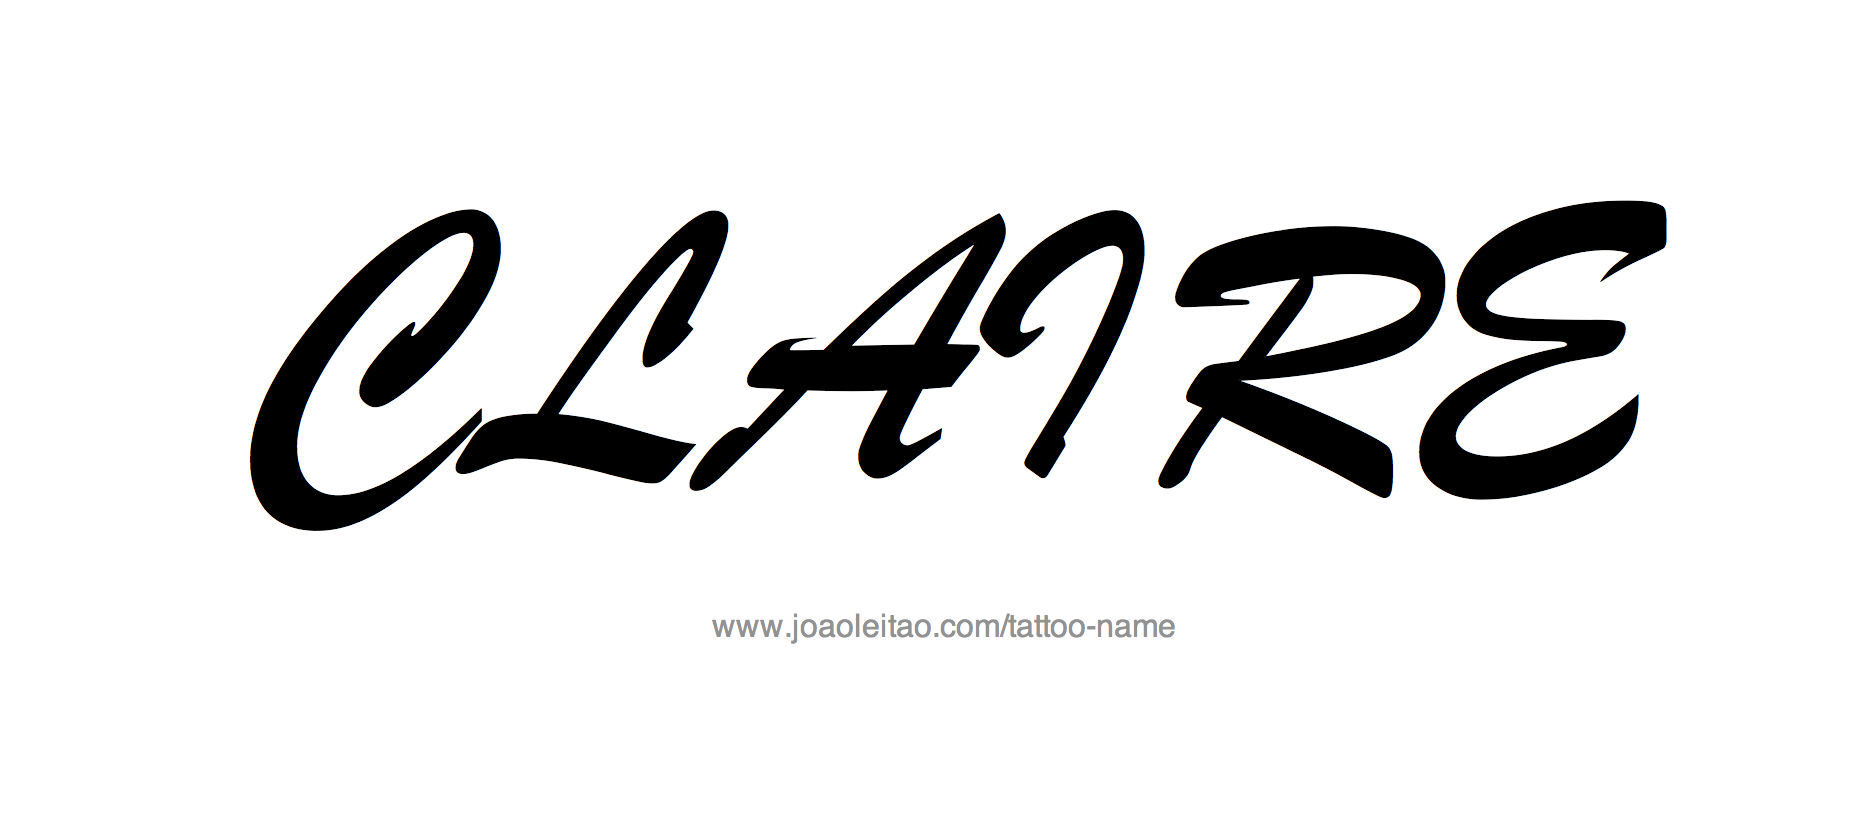 Tattoo Design Name Claire 